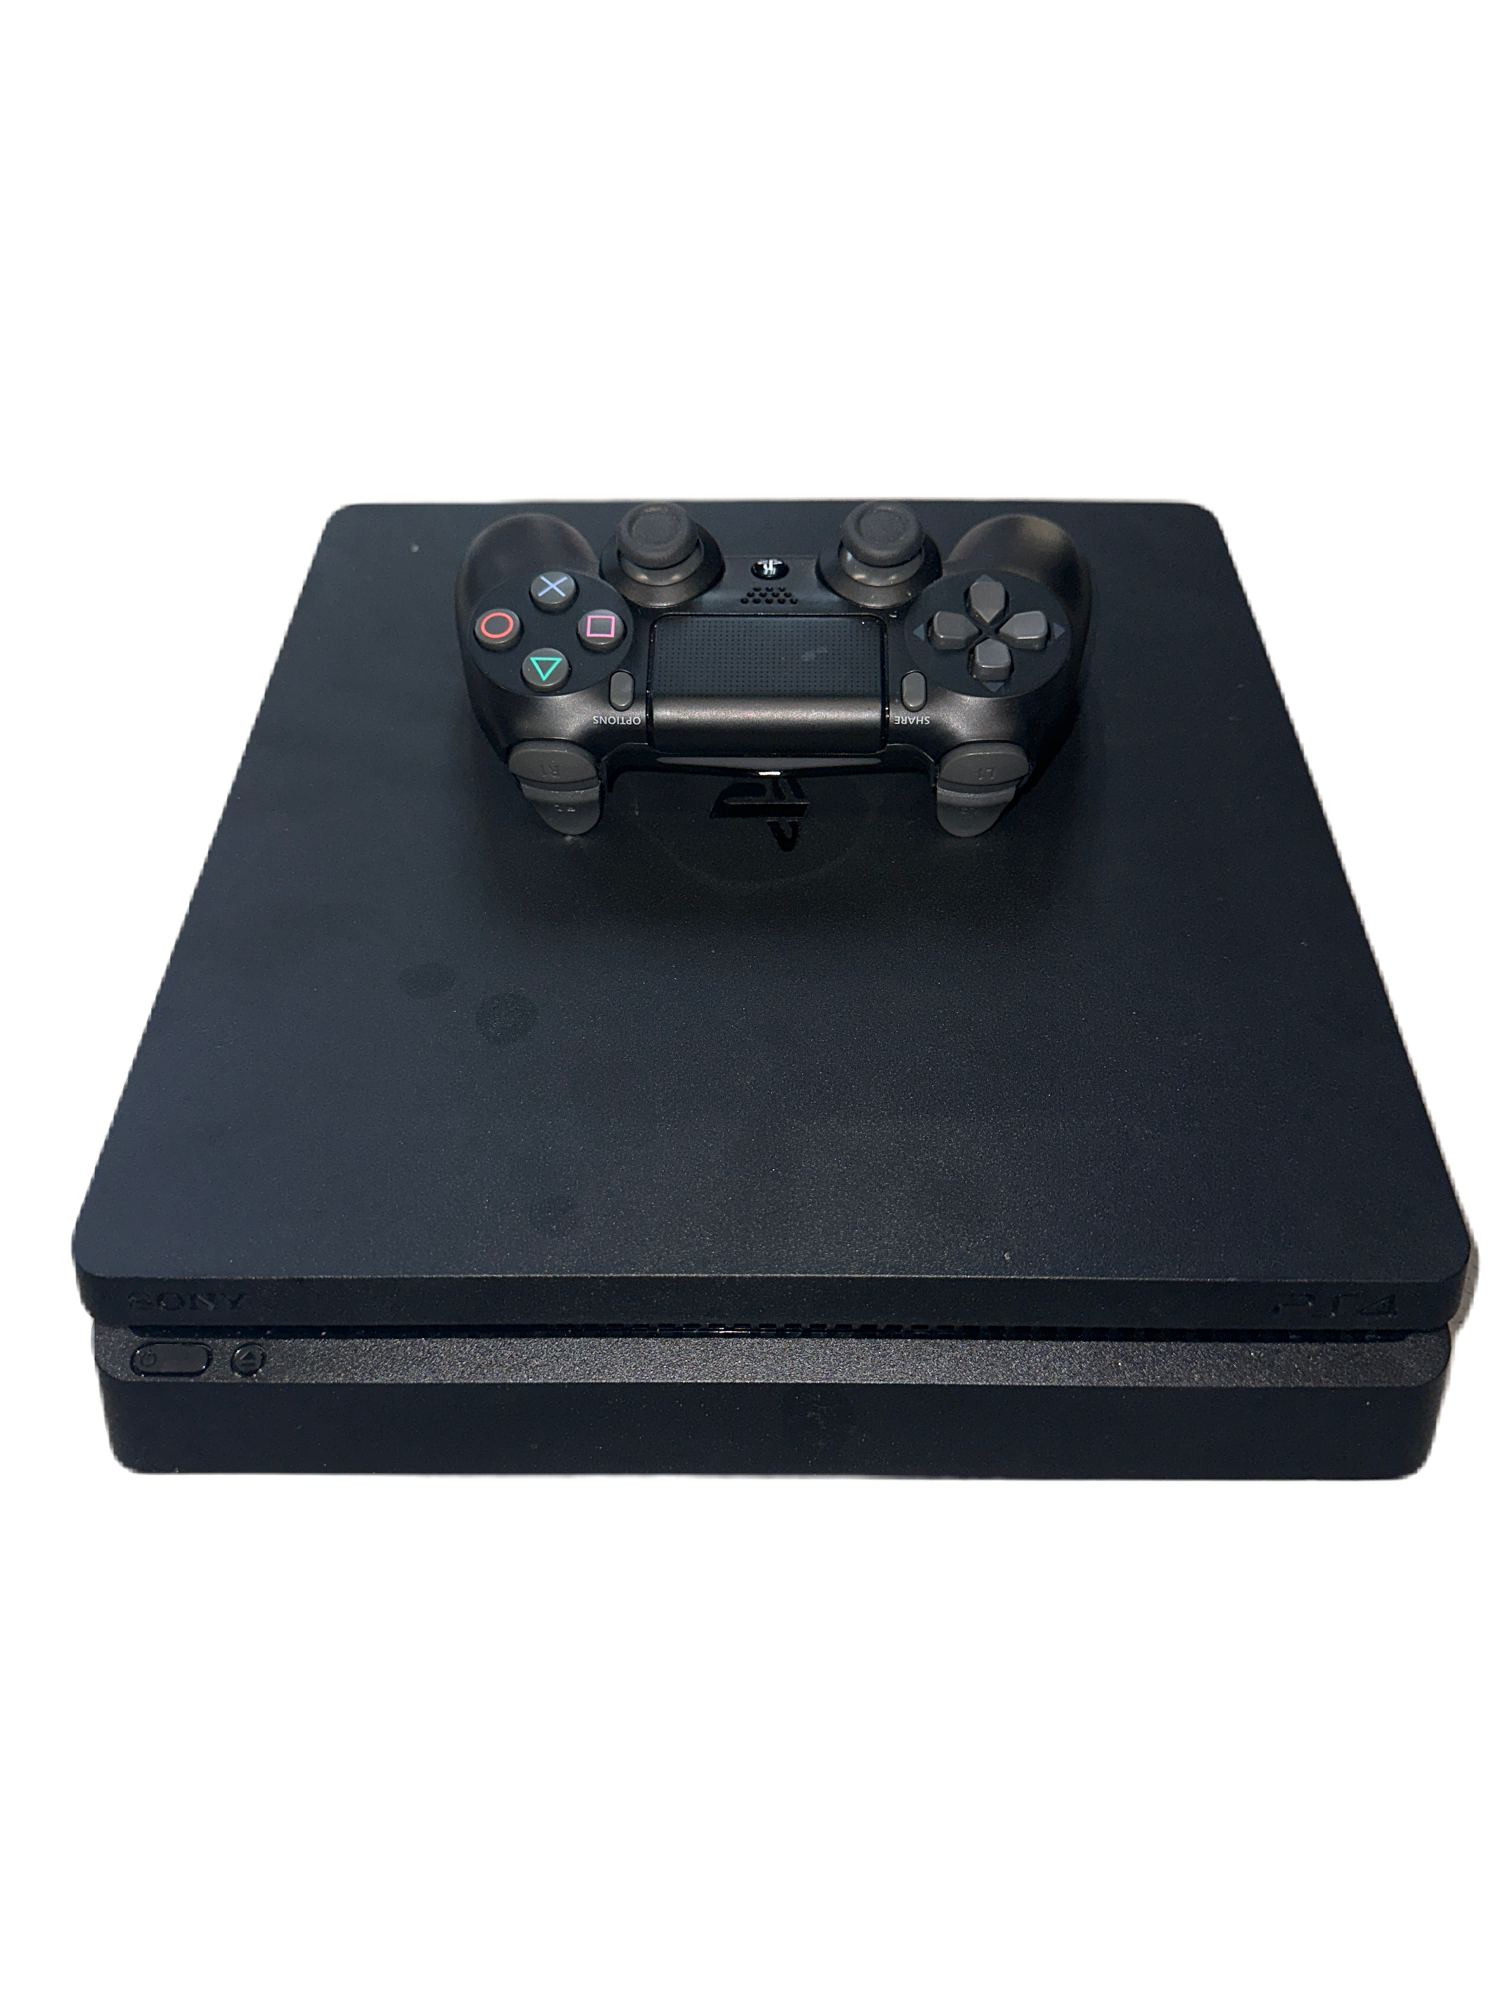 PlayStation 4 Slim 500GB Includes Controller